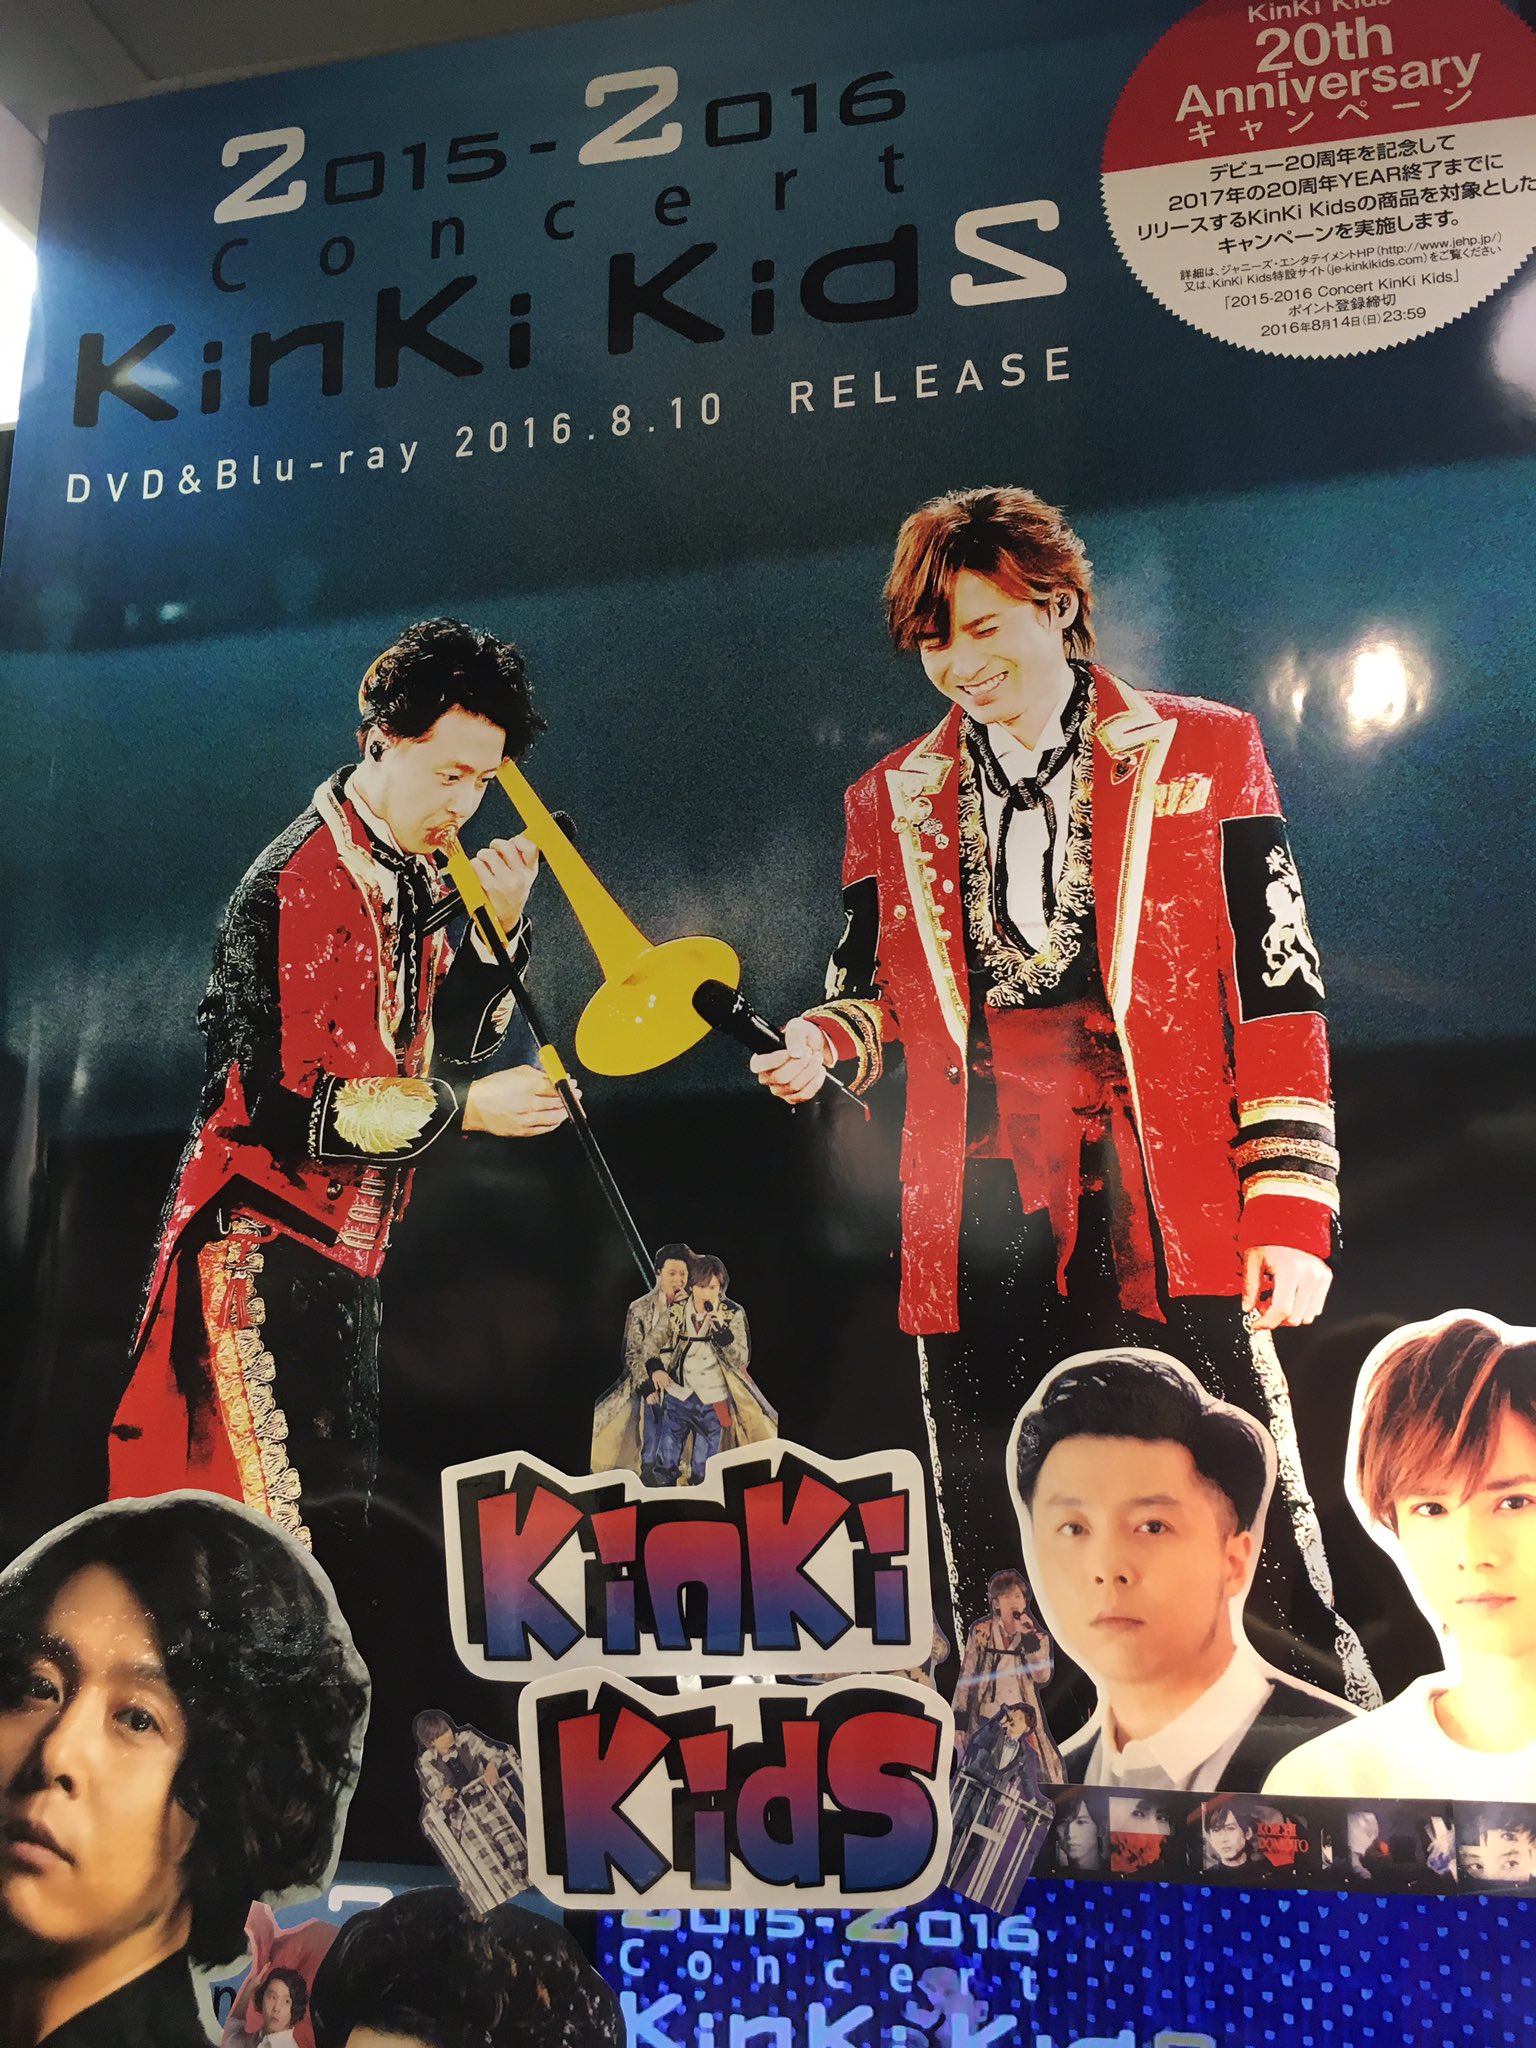 2015-2016 Concert KinKi Kids ［2DVD+ブックレッ